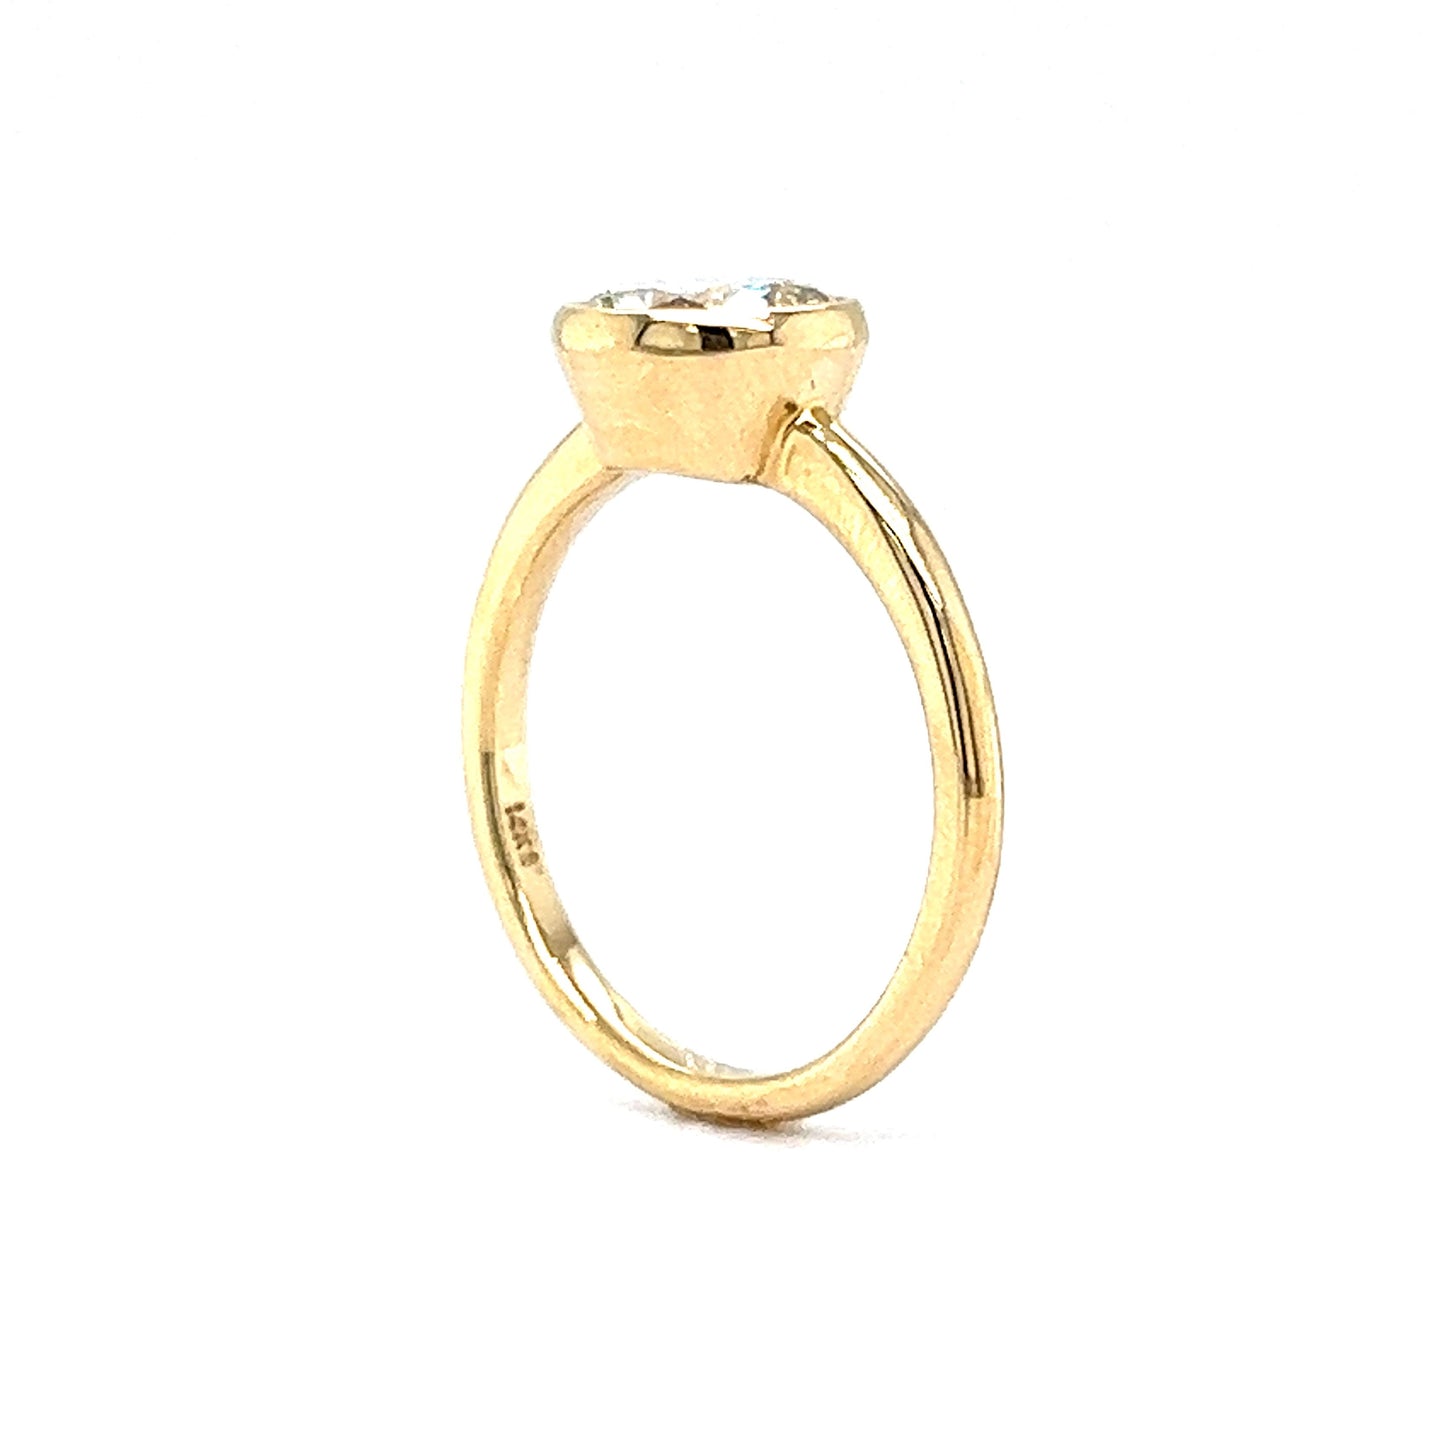 1.71 Round Brilliant Diamond Engagement Ring in 14k Yellow Gold